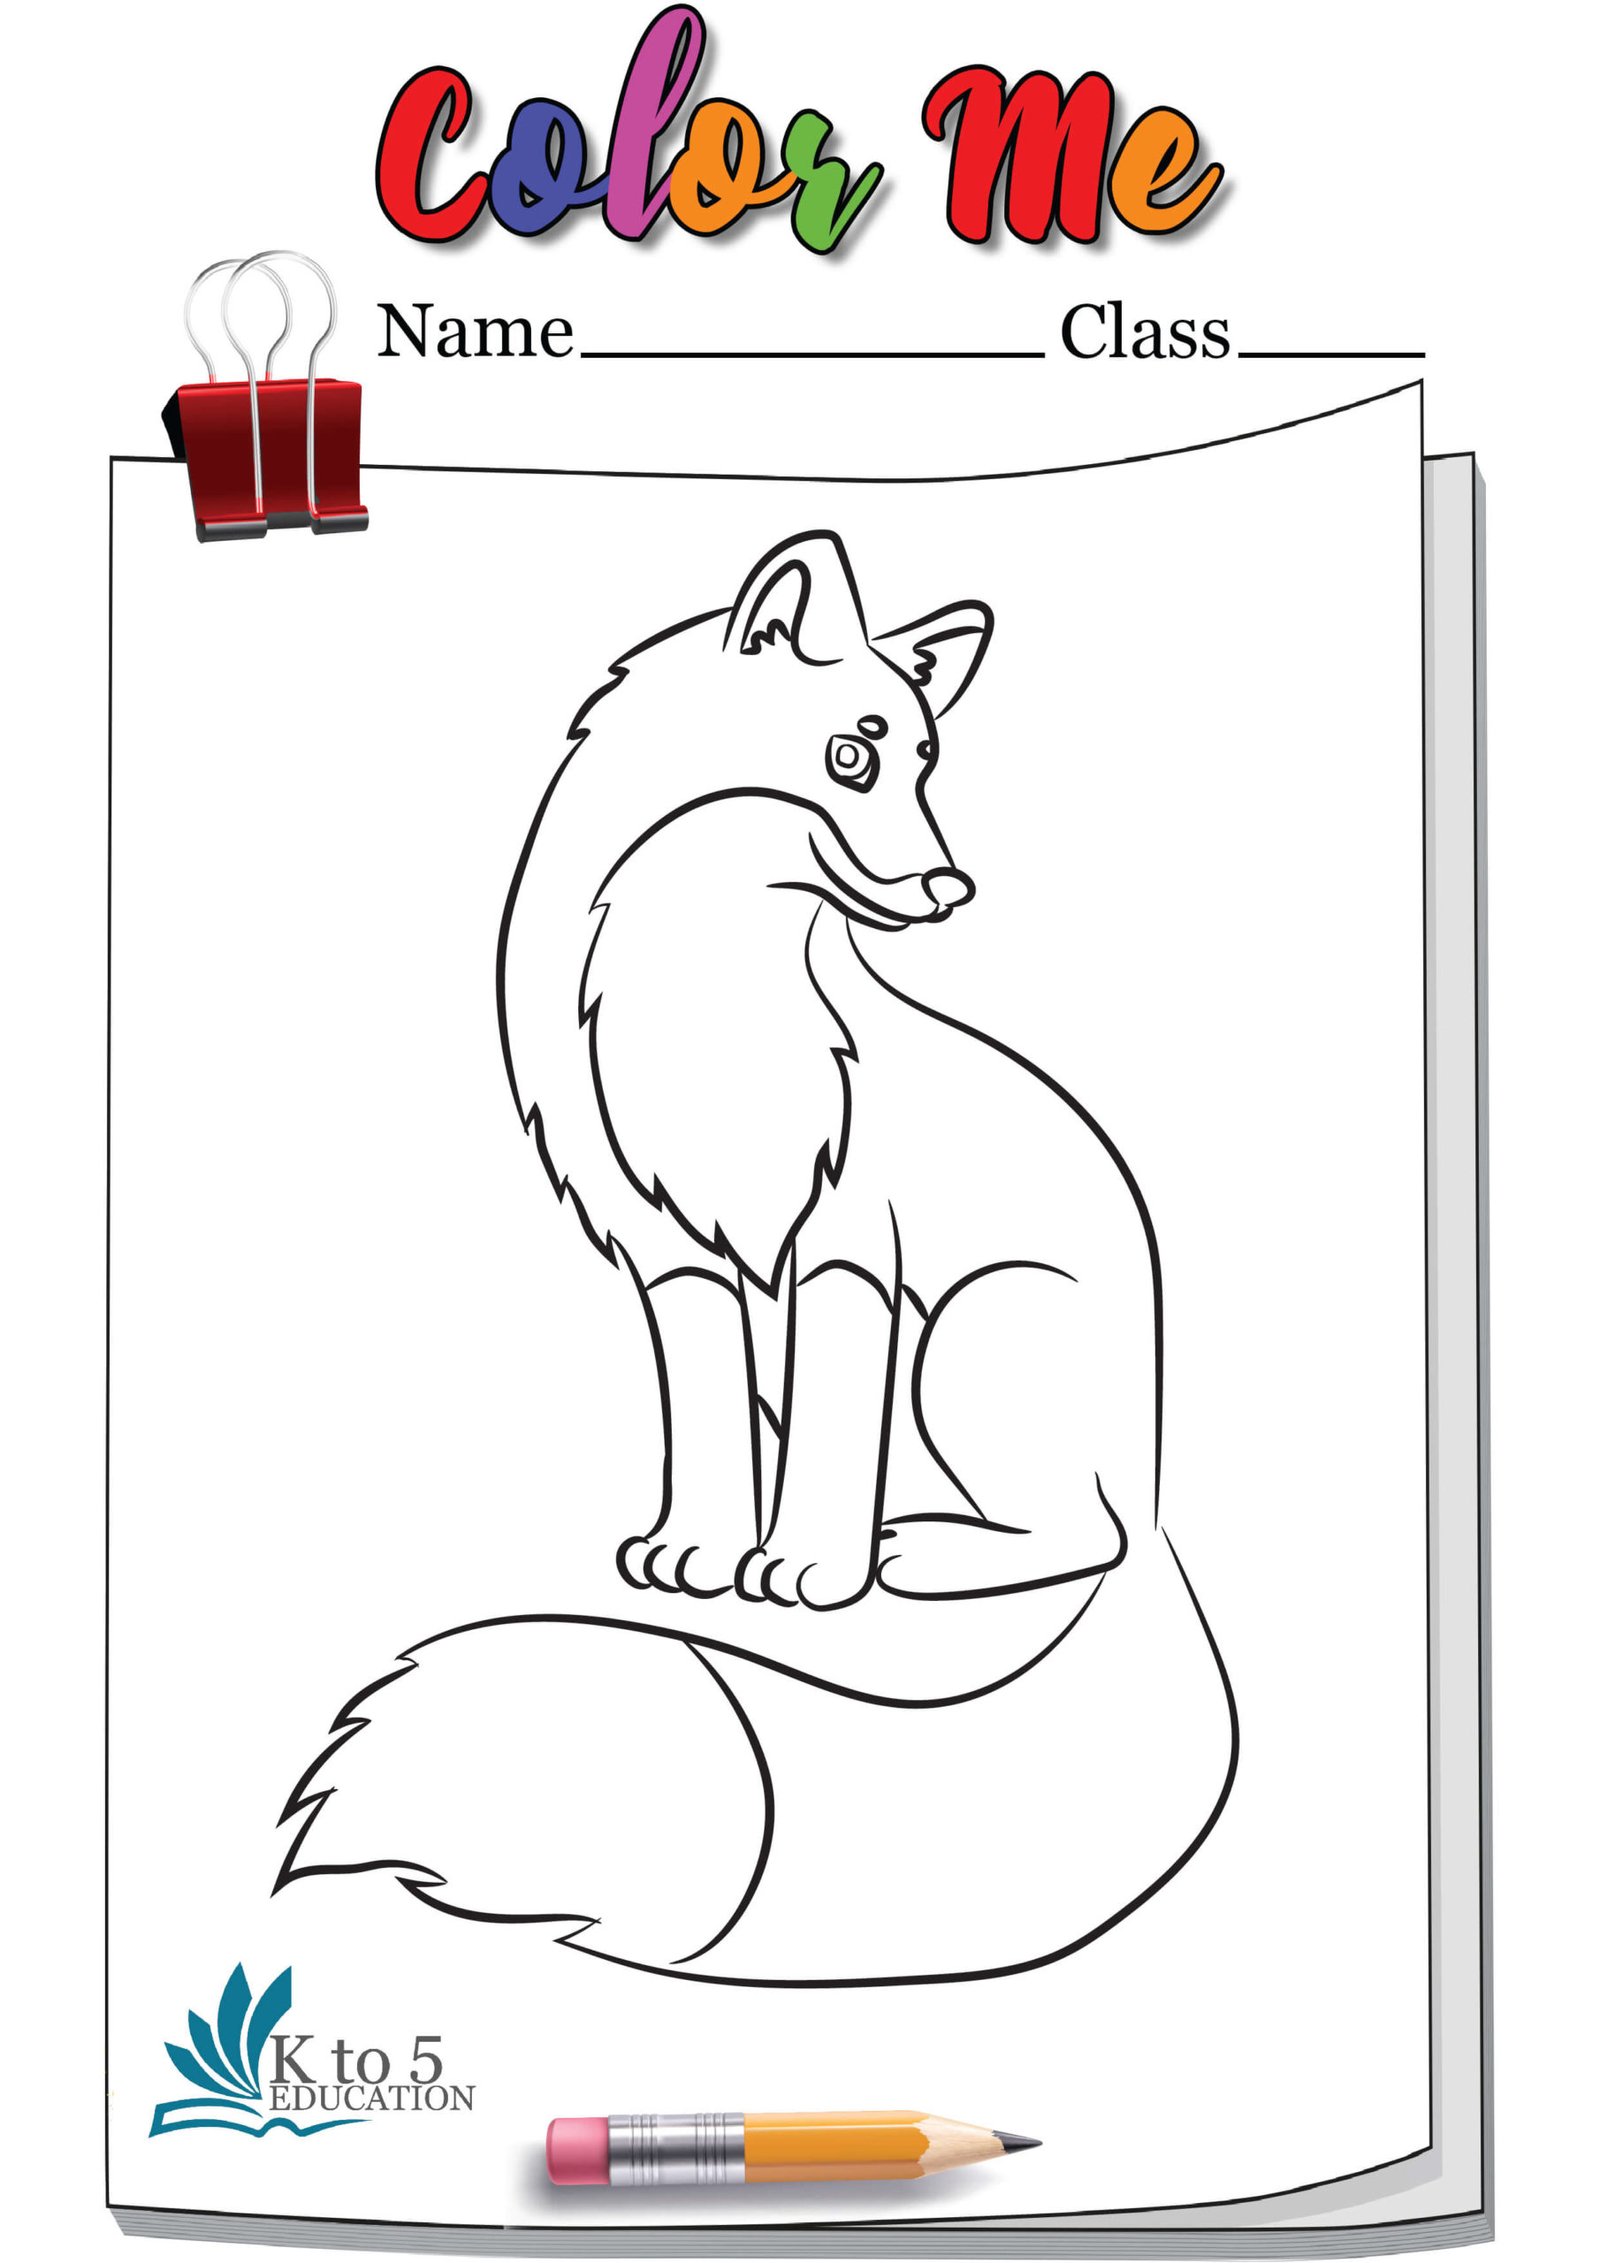 Beautiful Fox coloring page worksheet